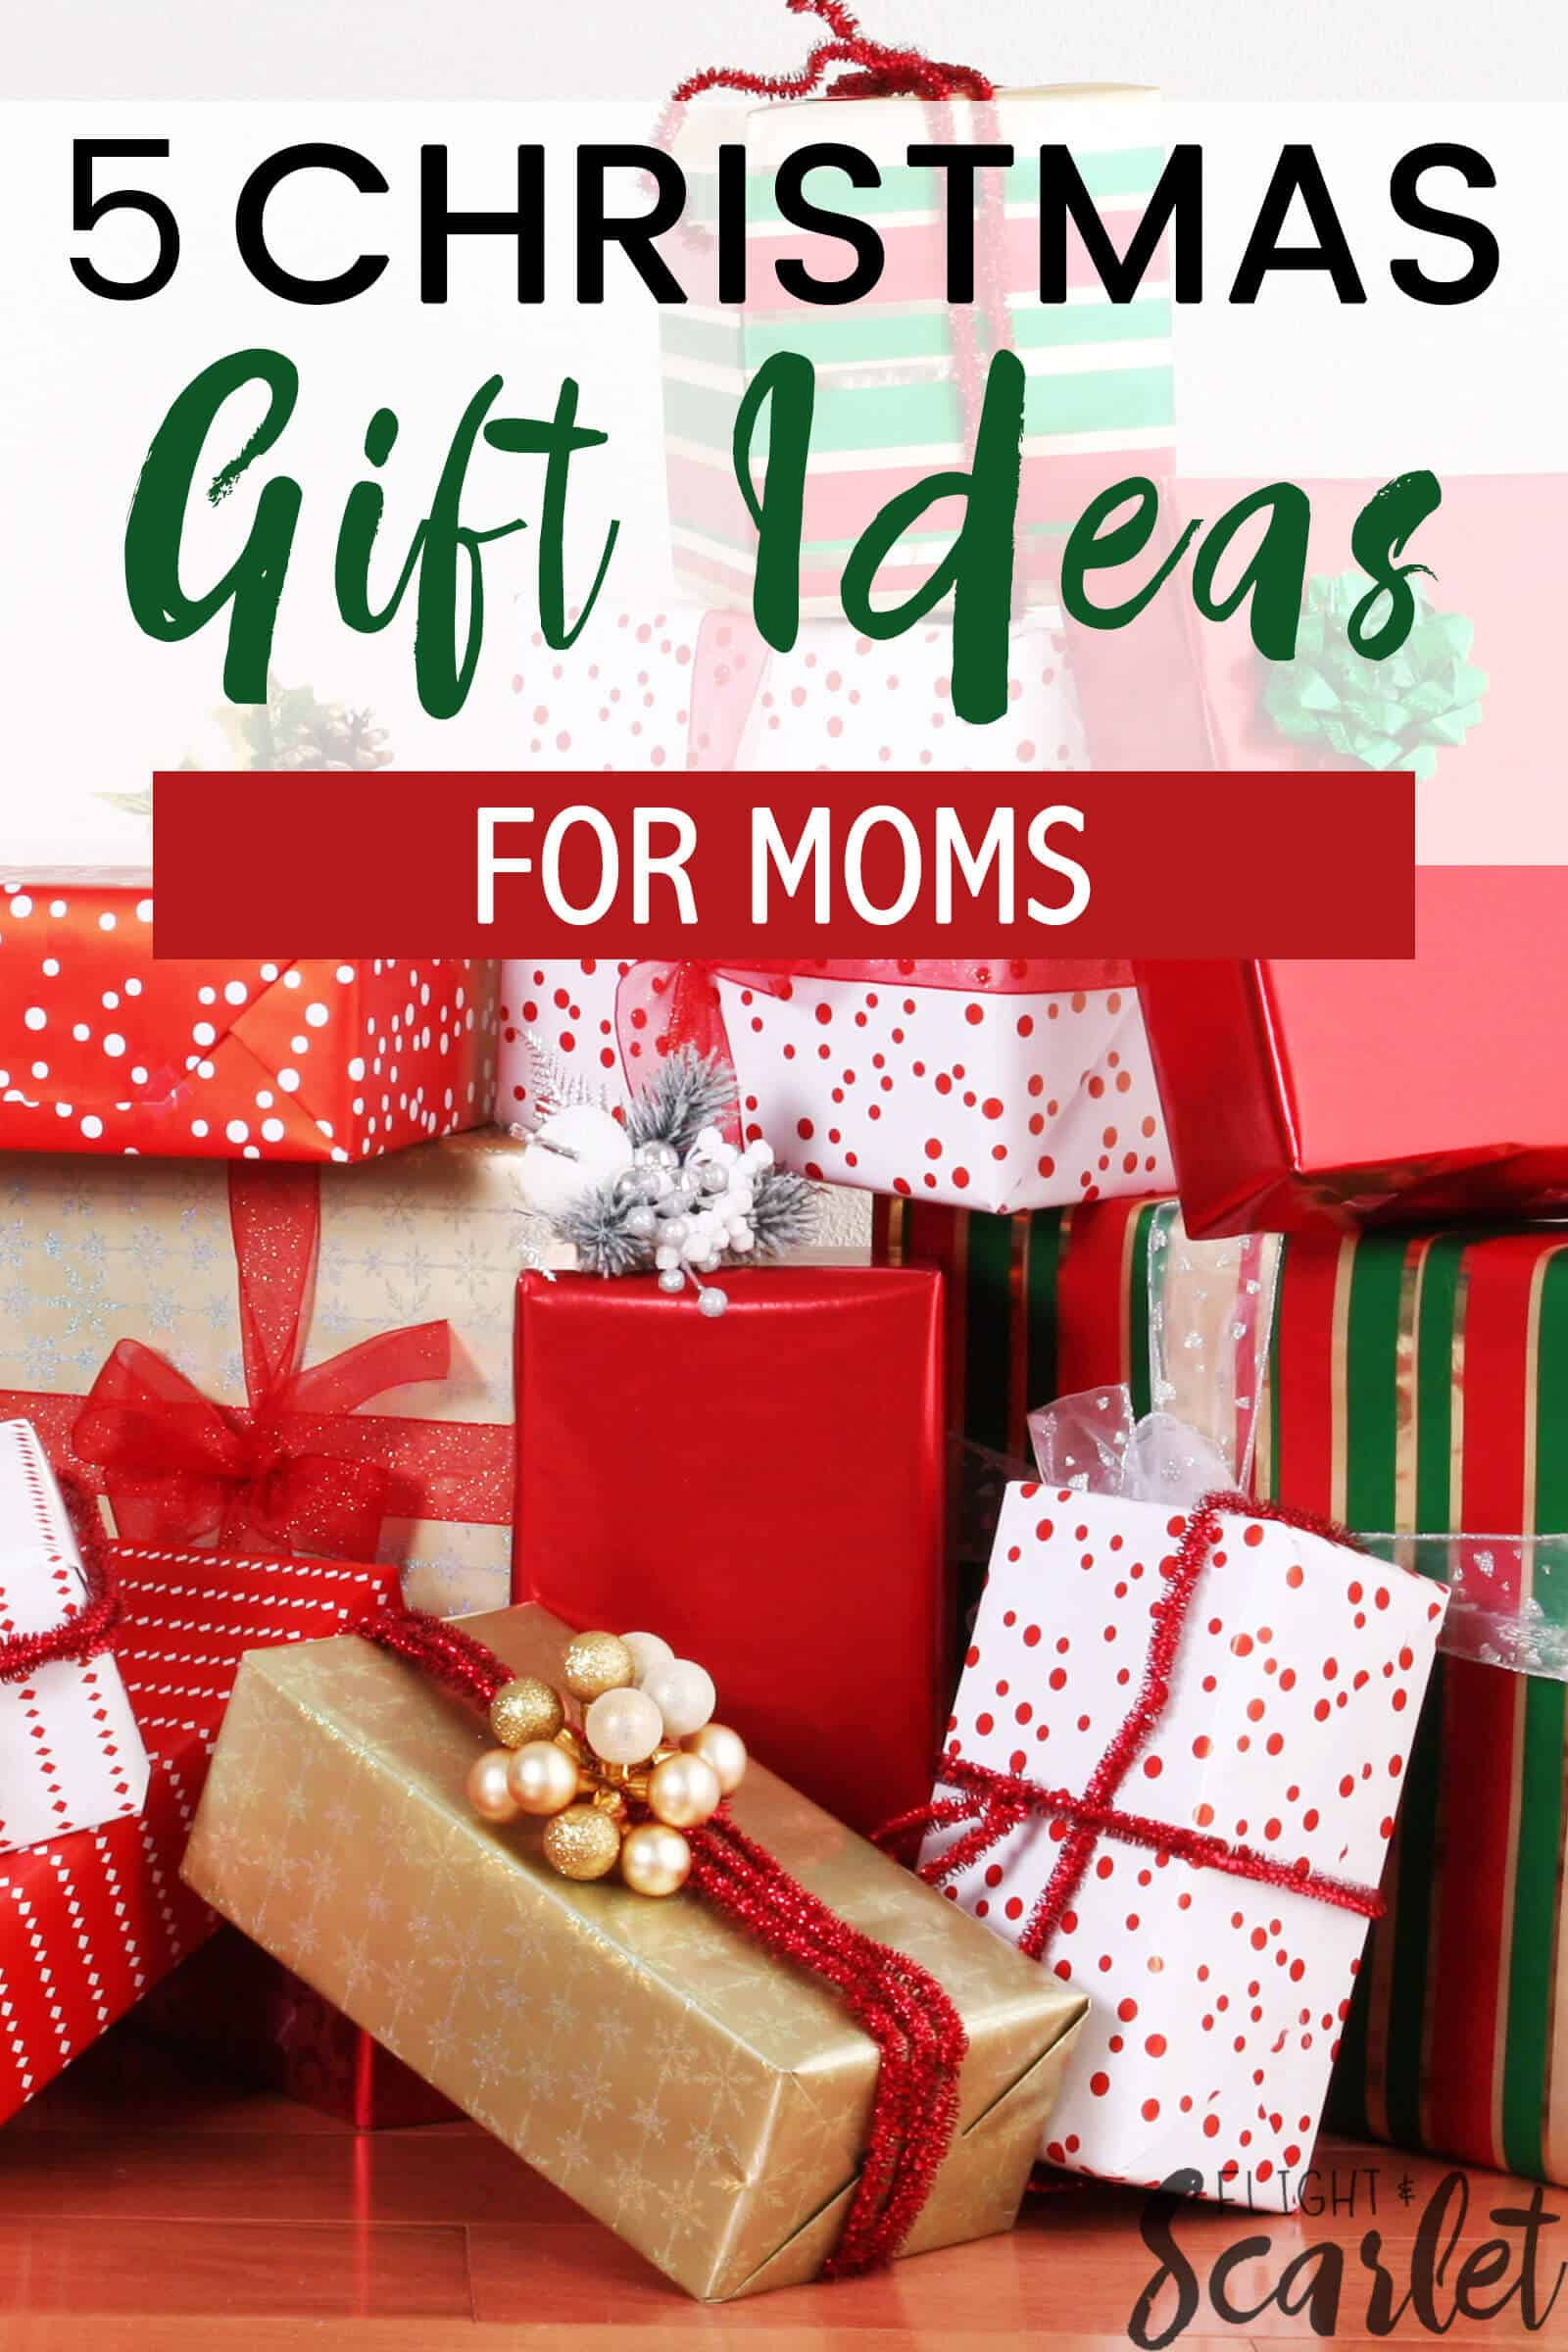 Christmas Gift Ideas For Moms
 5 Bud Friendly Gift Ideas For Moms Flight & Scarlet